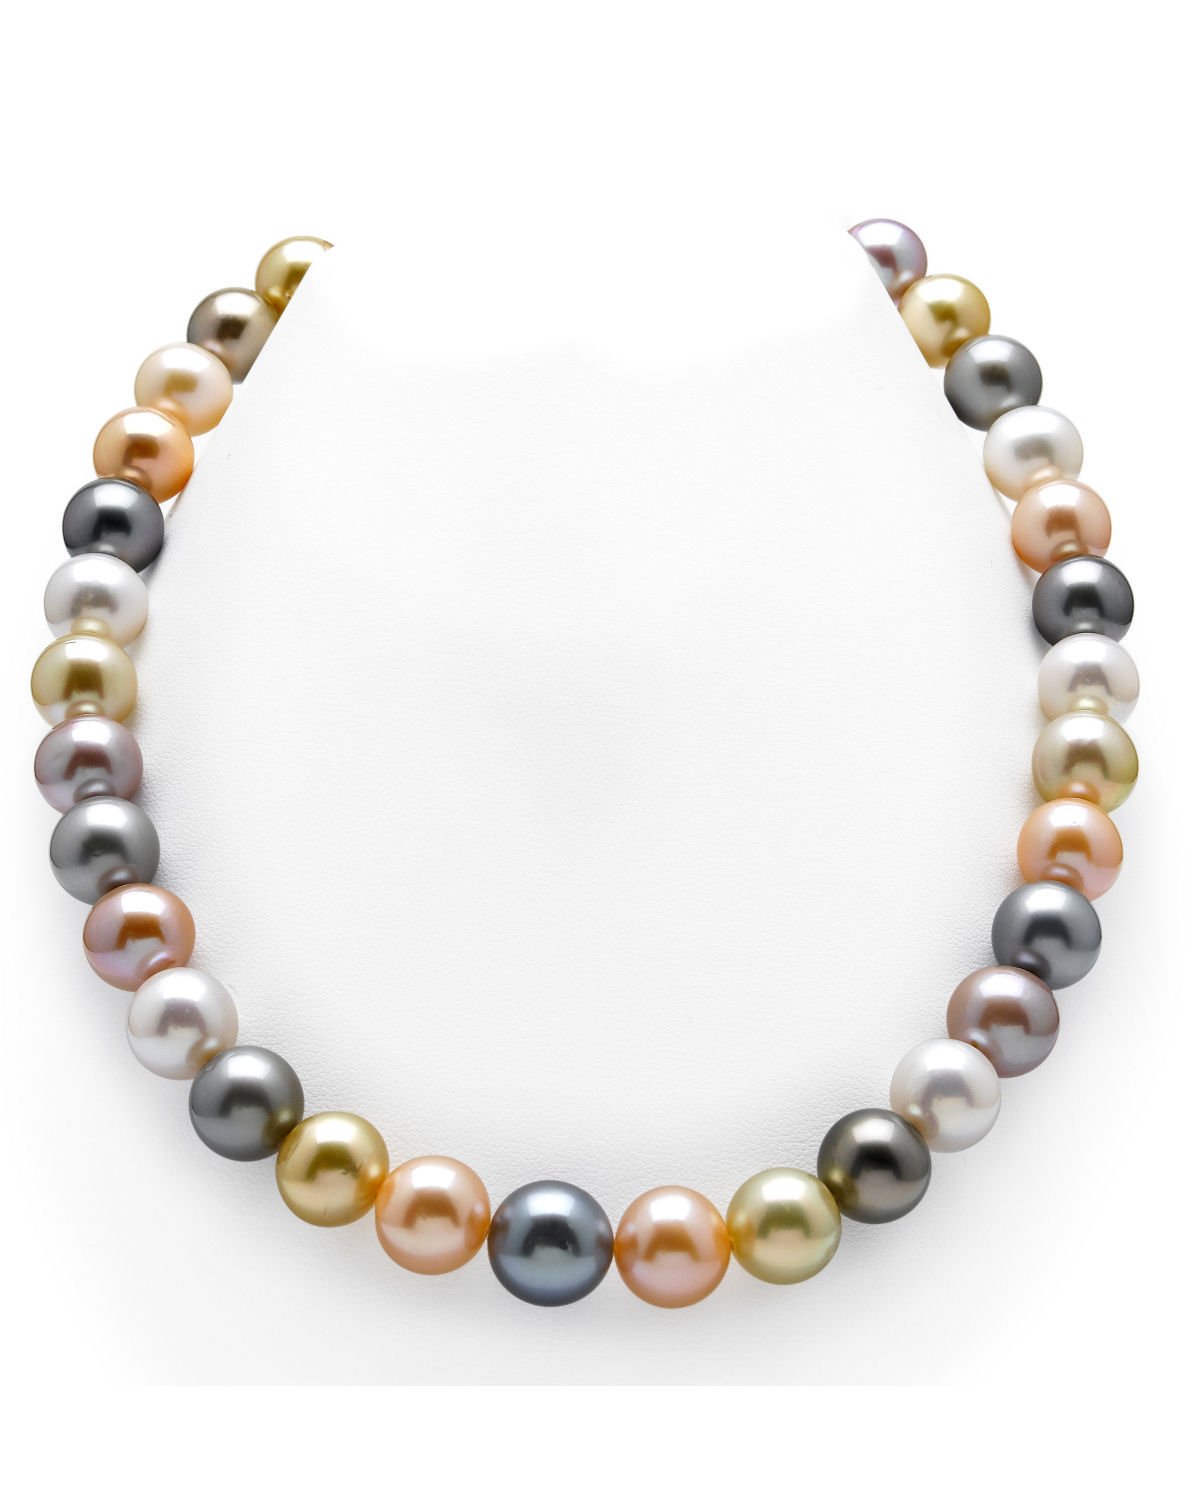 12mm multicolor shell pearl necklace bracelet Earring Set 